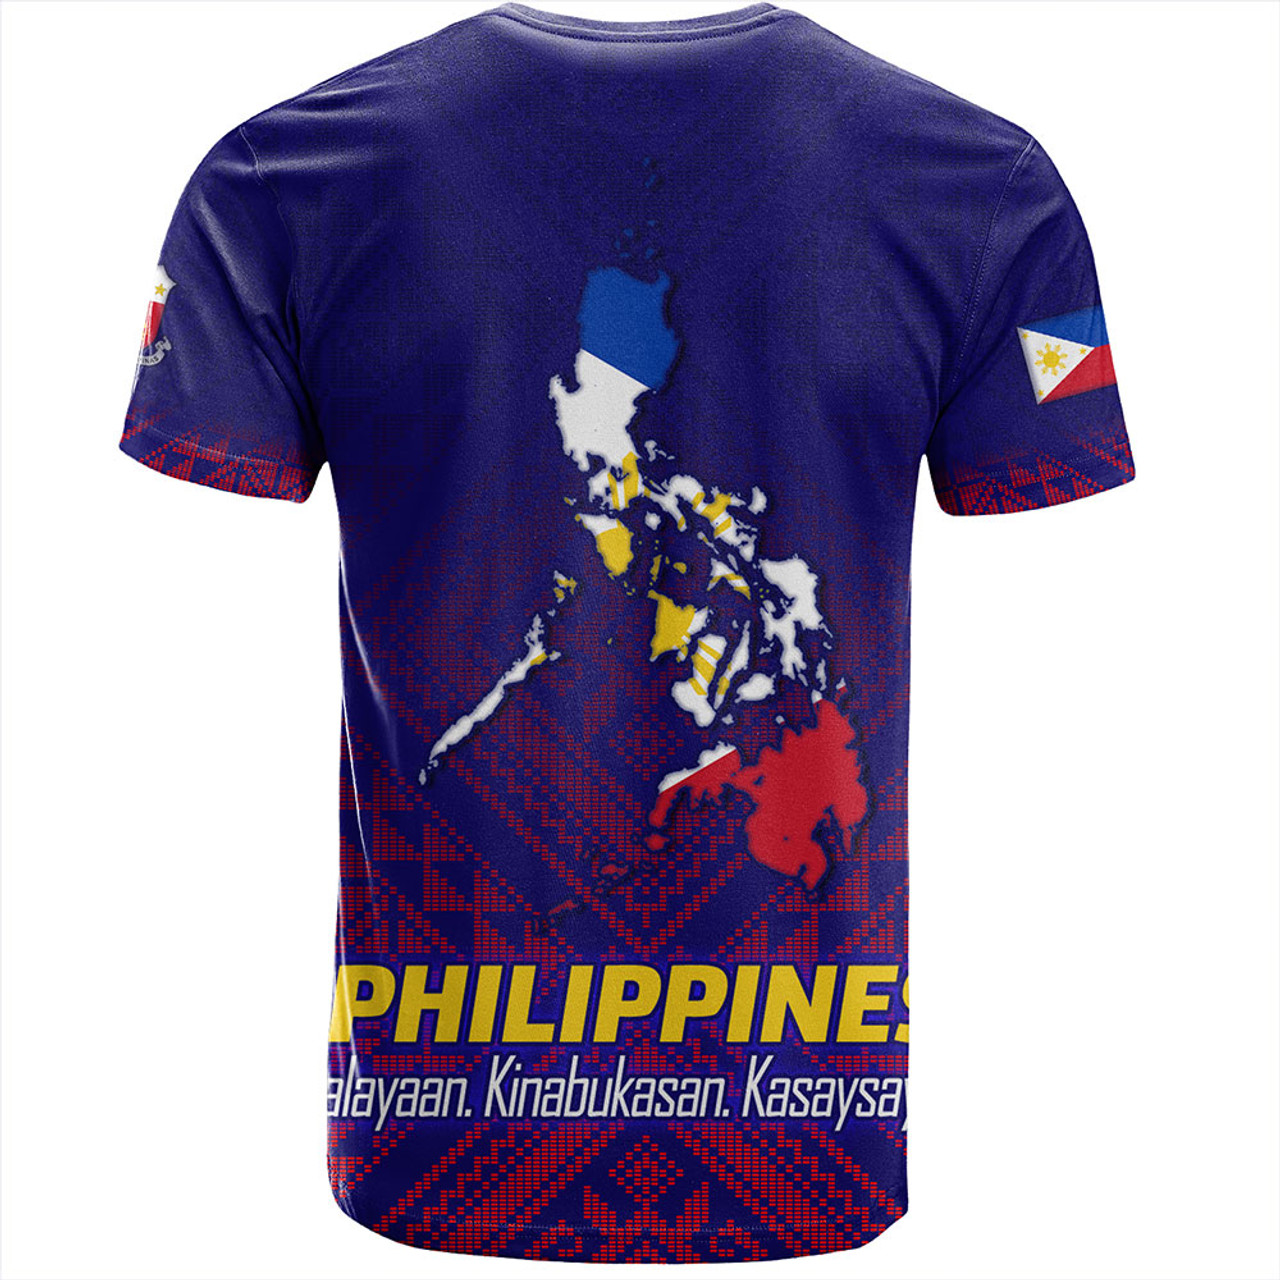 Philippines Filipinos T-Shirt Philippines Independence Day Kalayaan-Kinabukasan-Kasaysayan